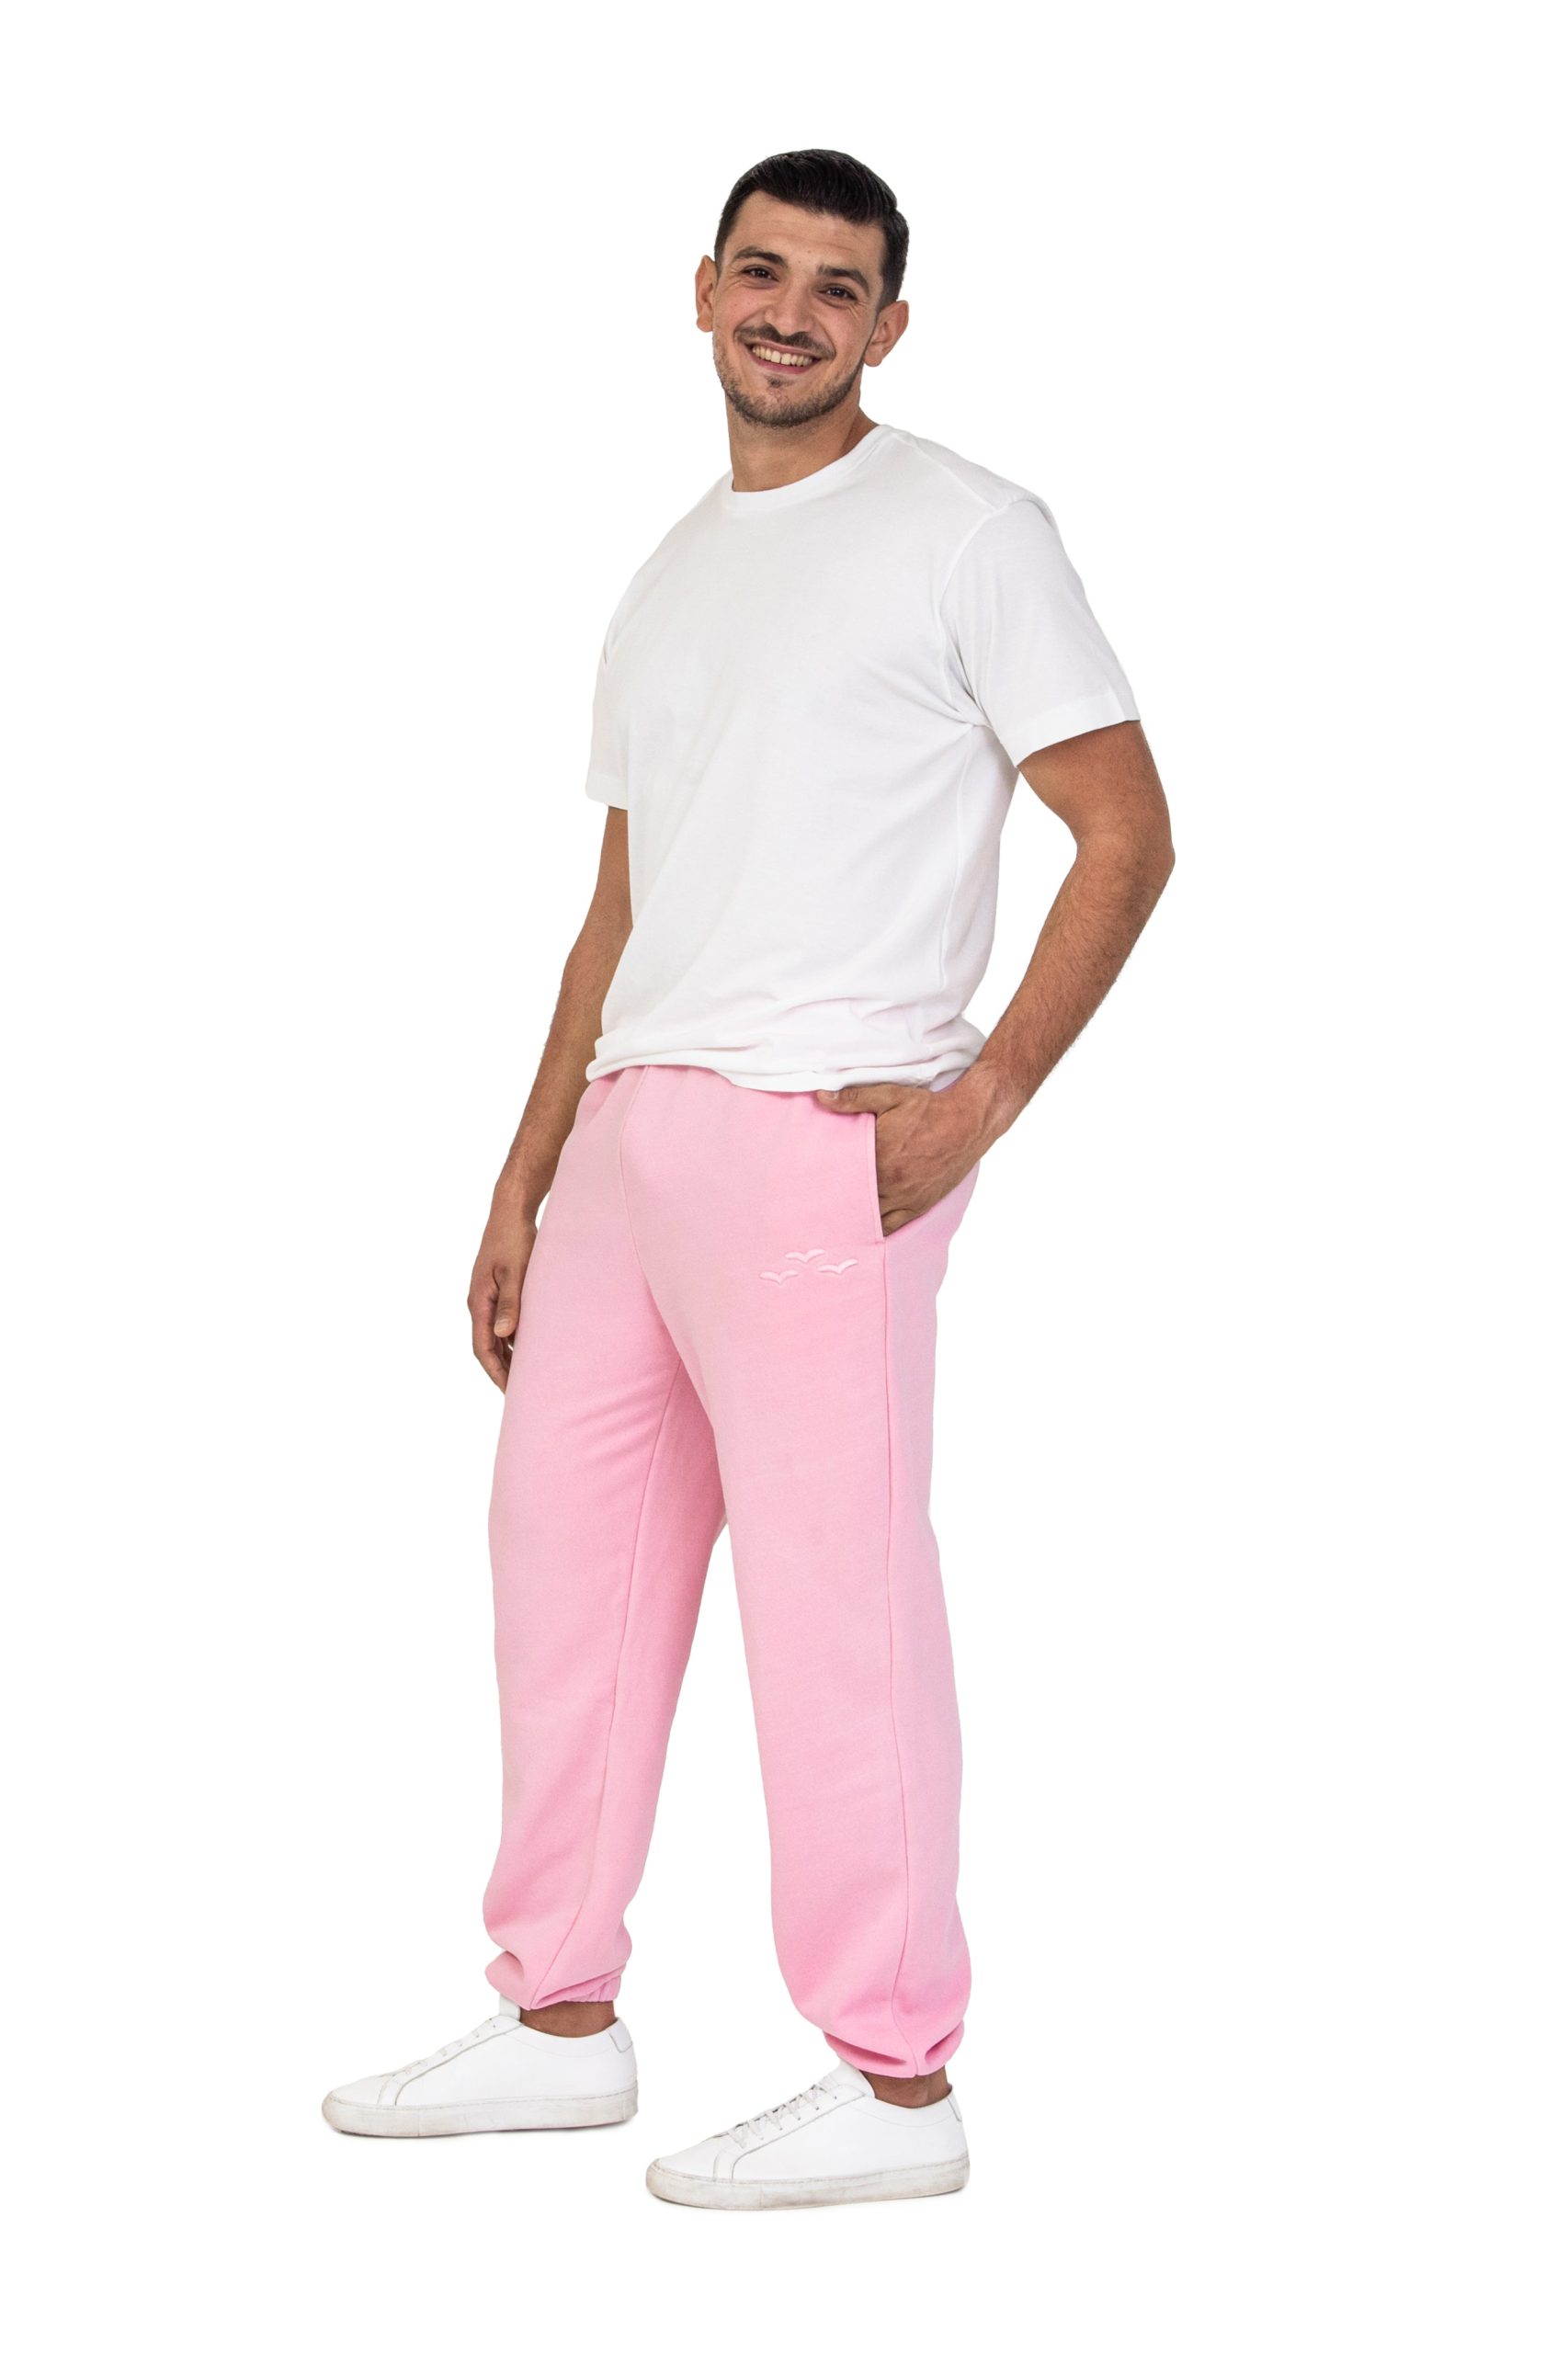 Men’s pink sweatpants: Redefining Comfort & Self-Expression